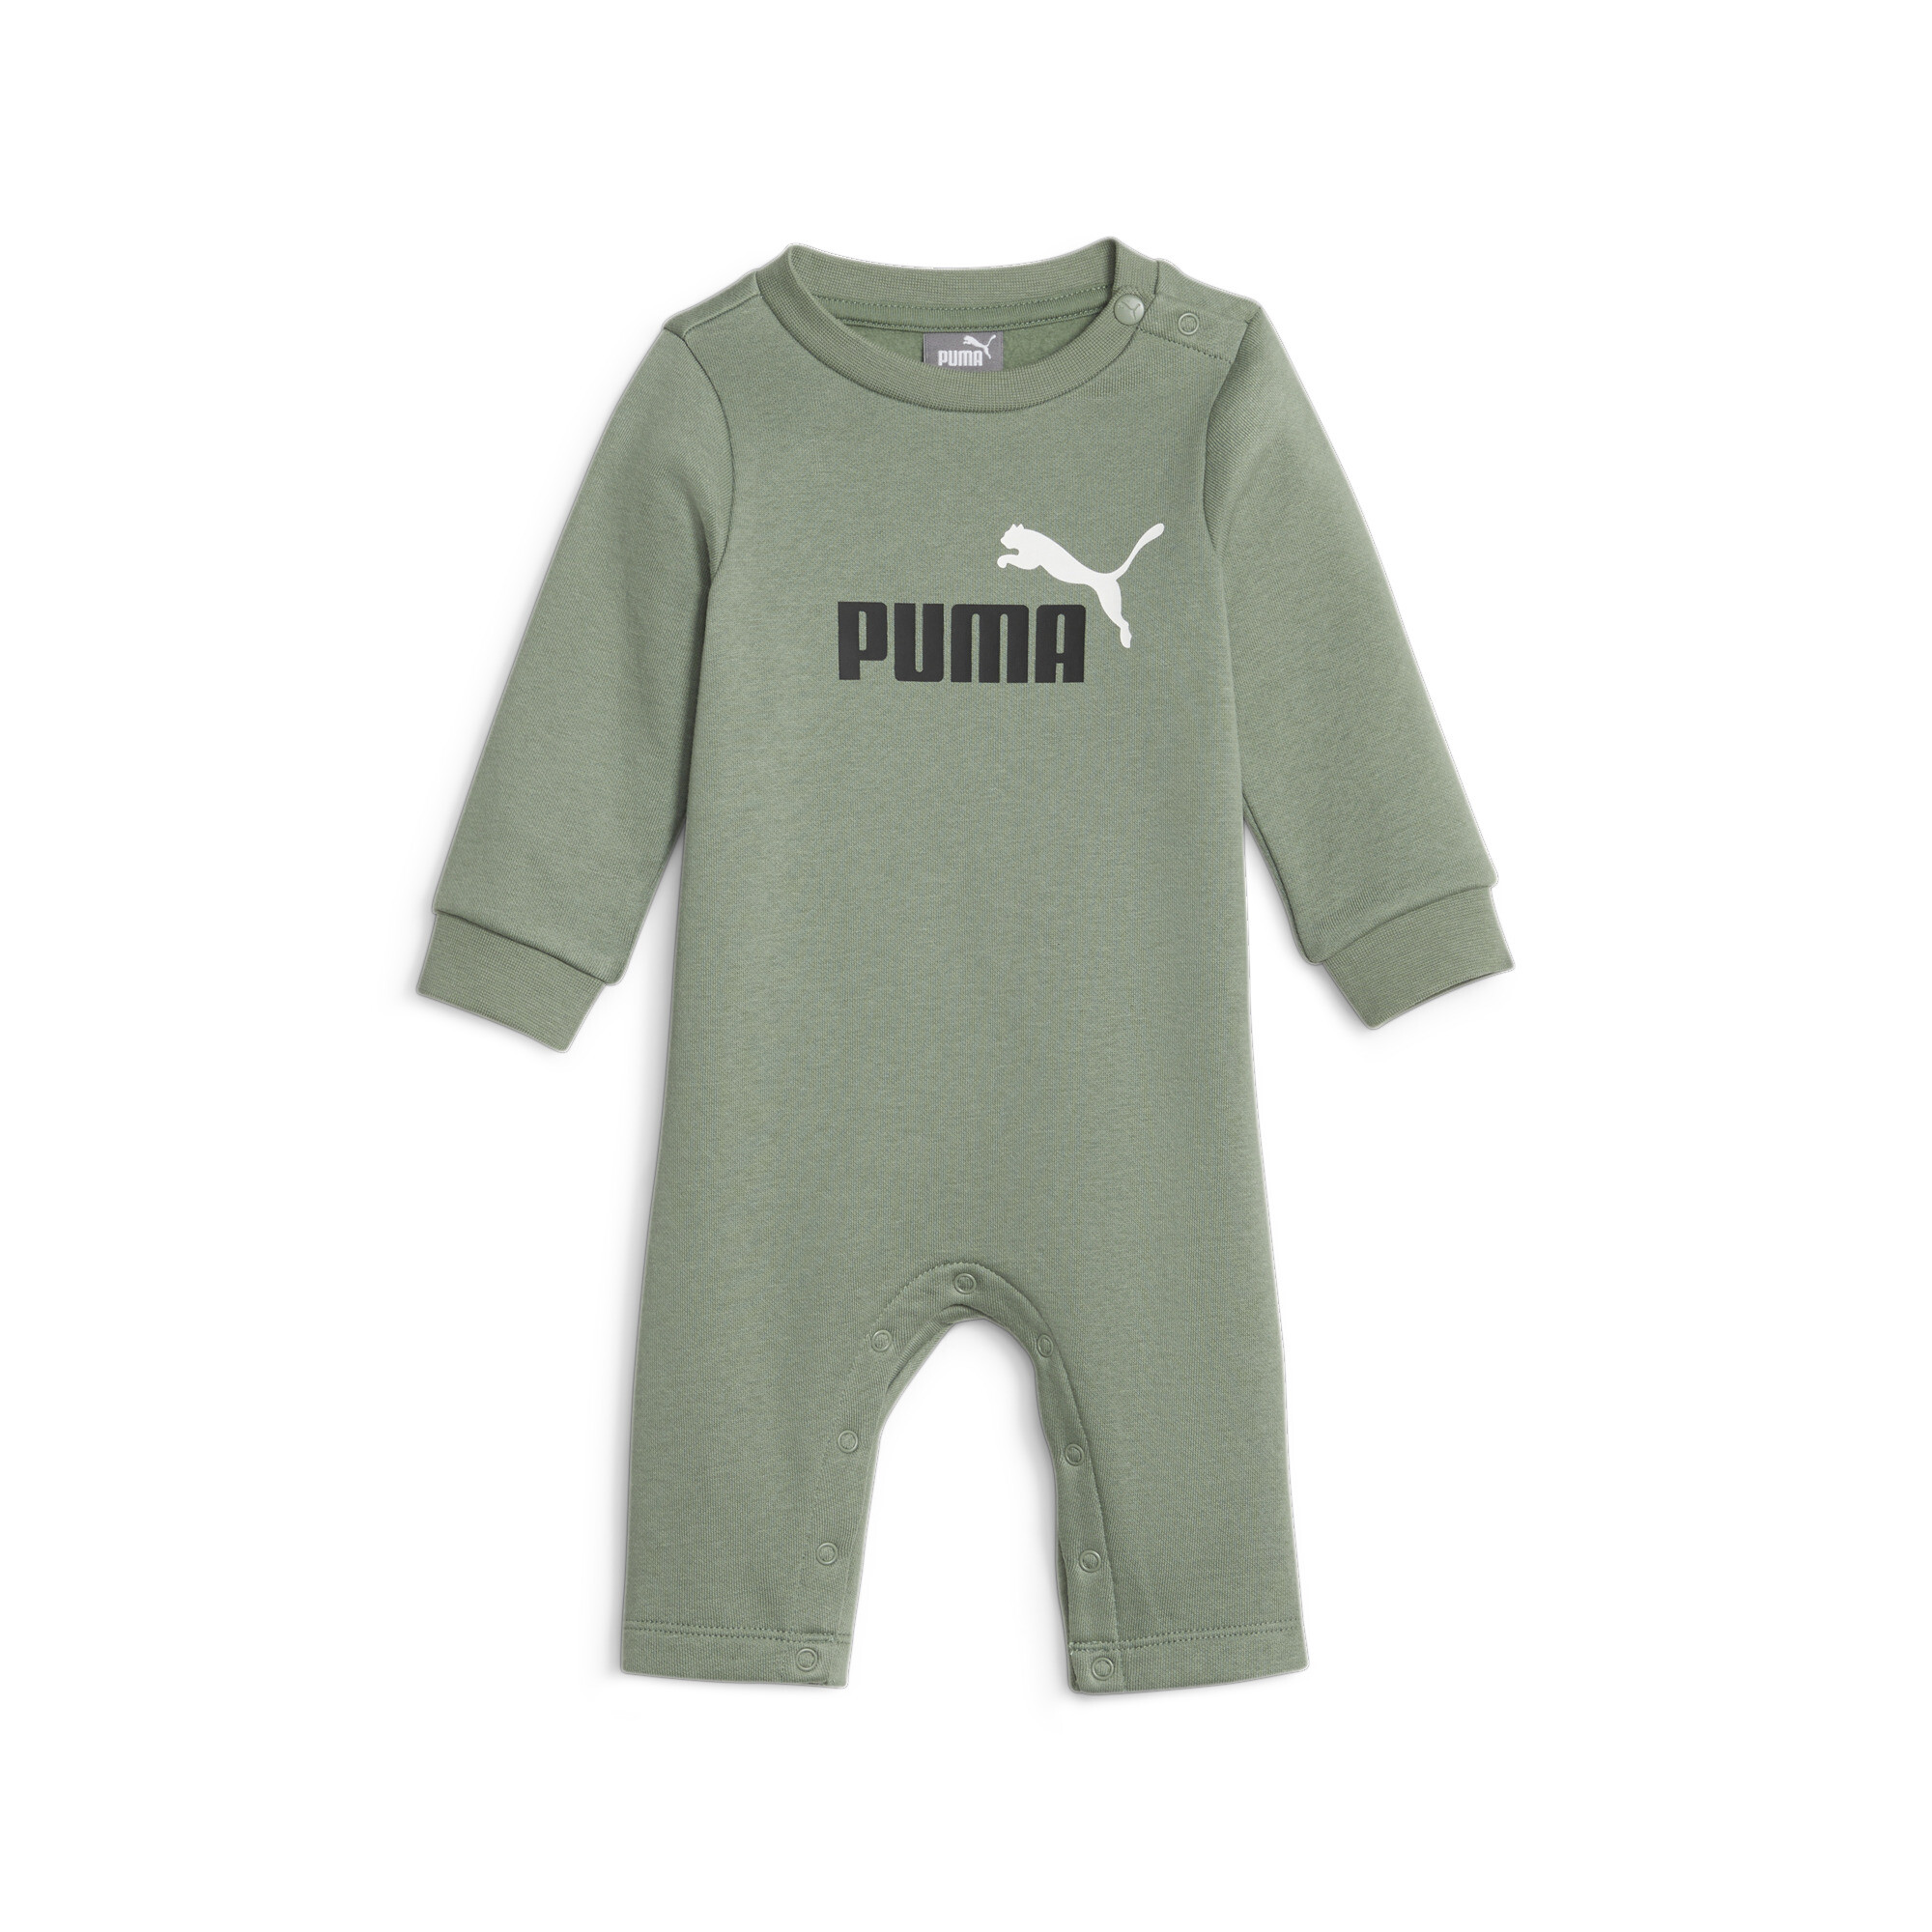 Puma Minicats Newborn Coverall Babies, Green, Size 2-4M, Clothing